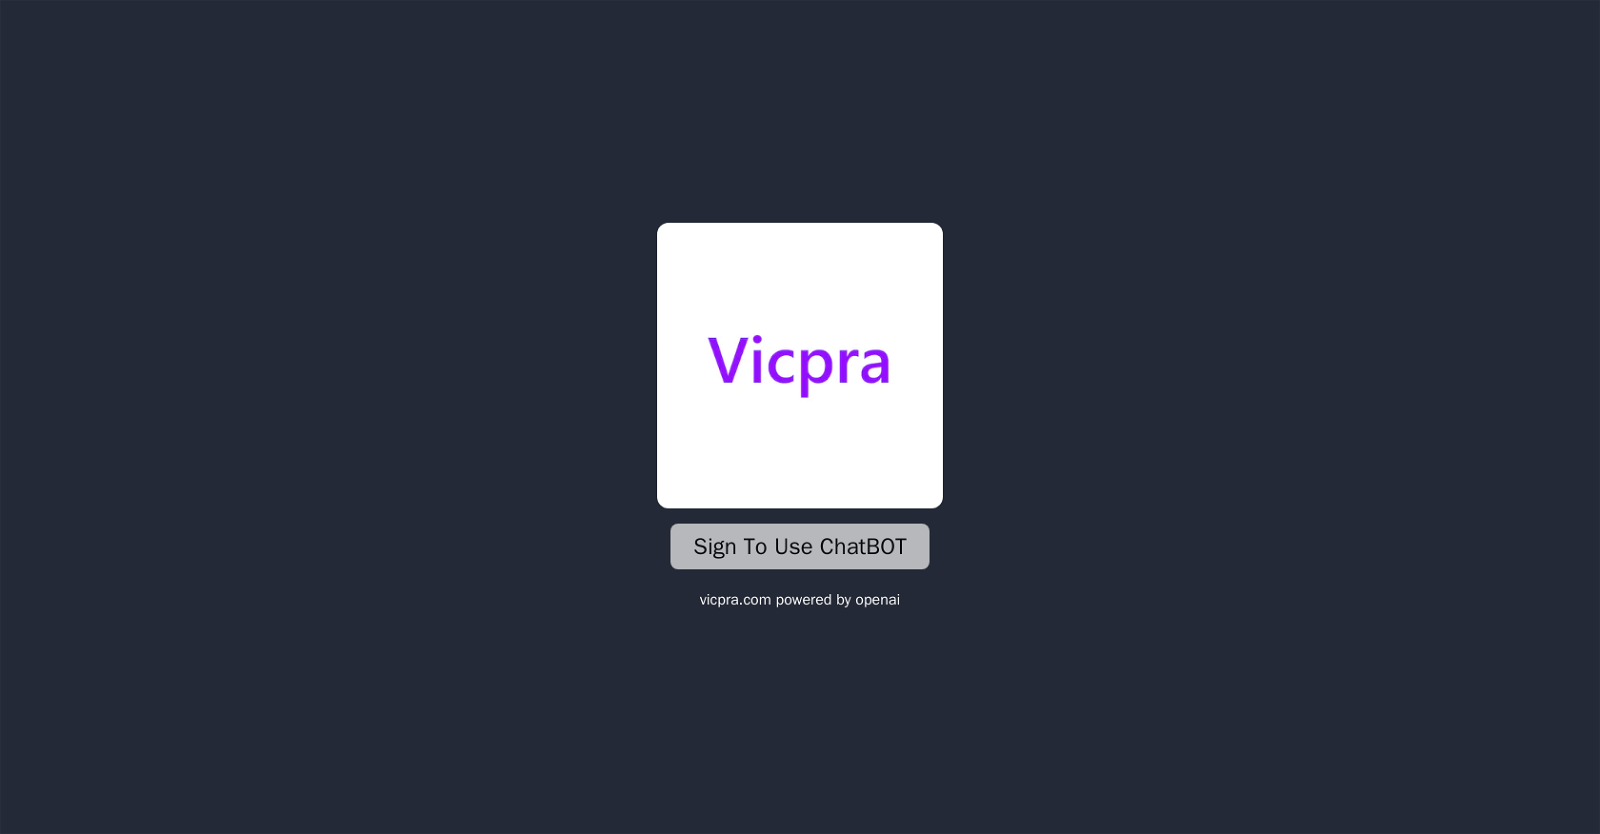 Vicpra website